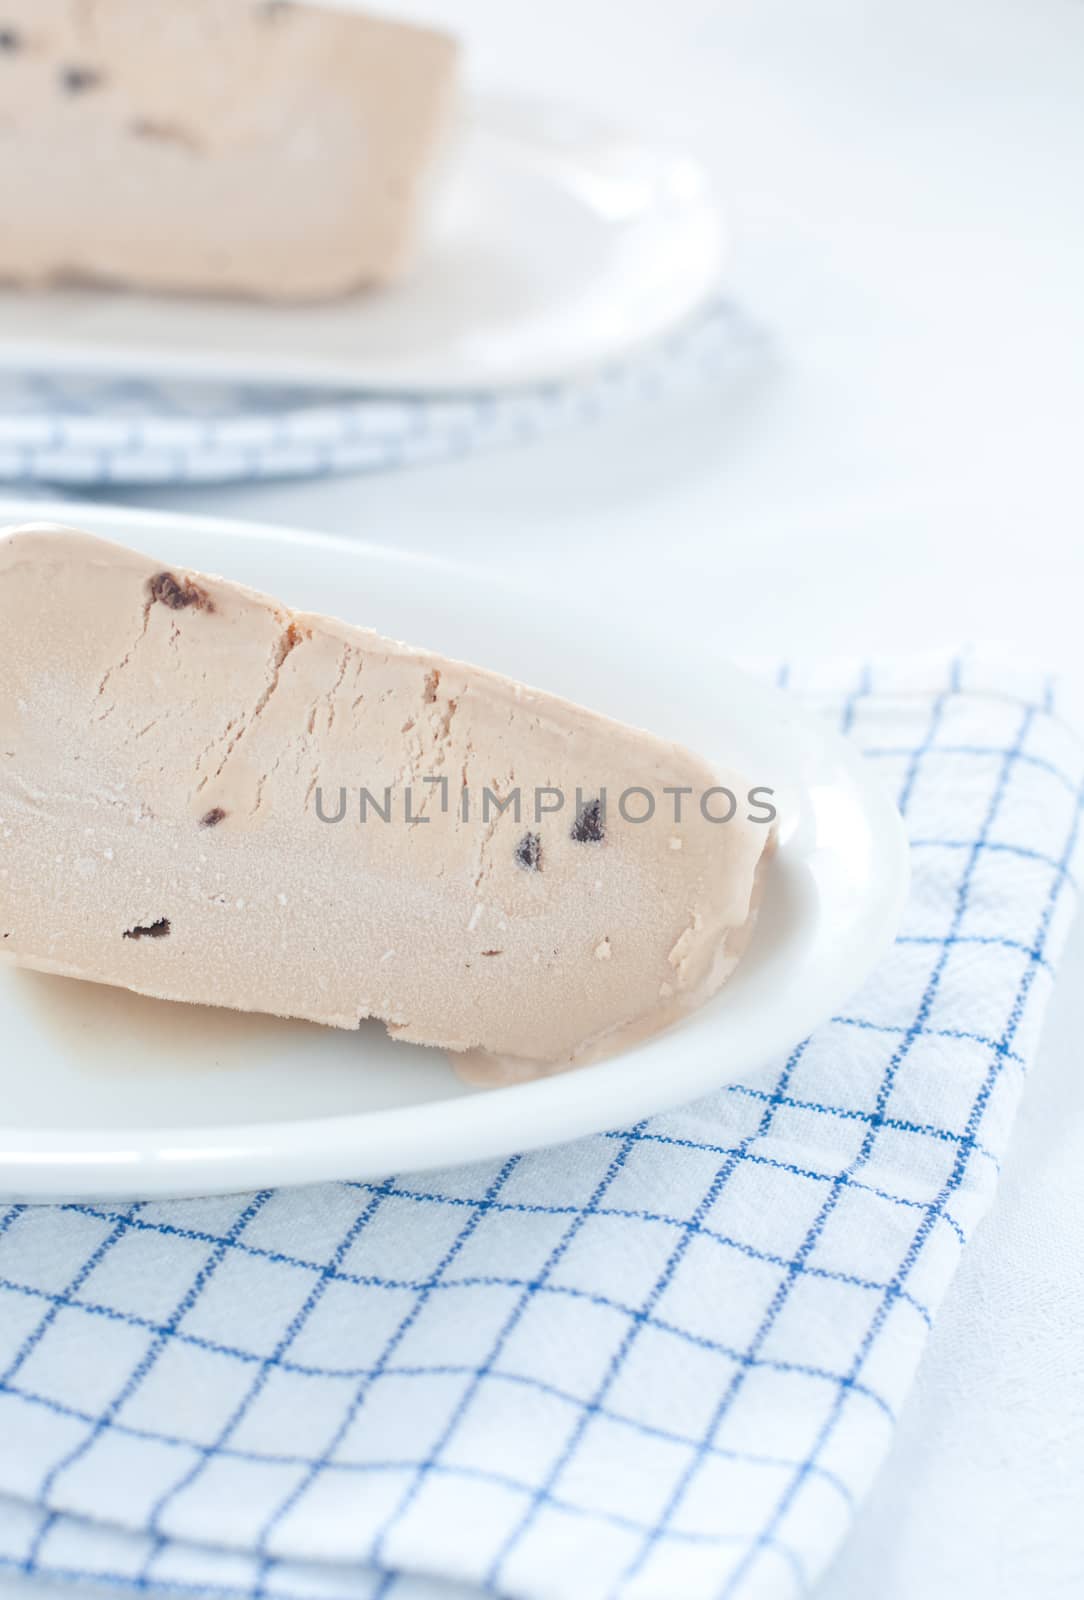 Hazelnut ice cream typical of Calabria called truffle, italy